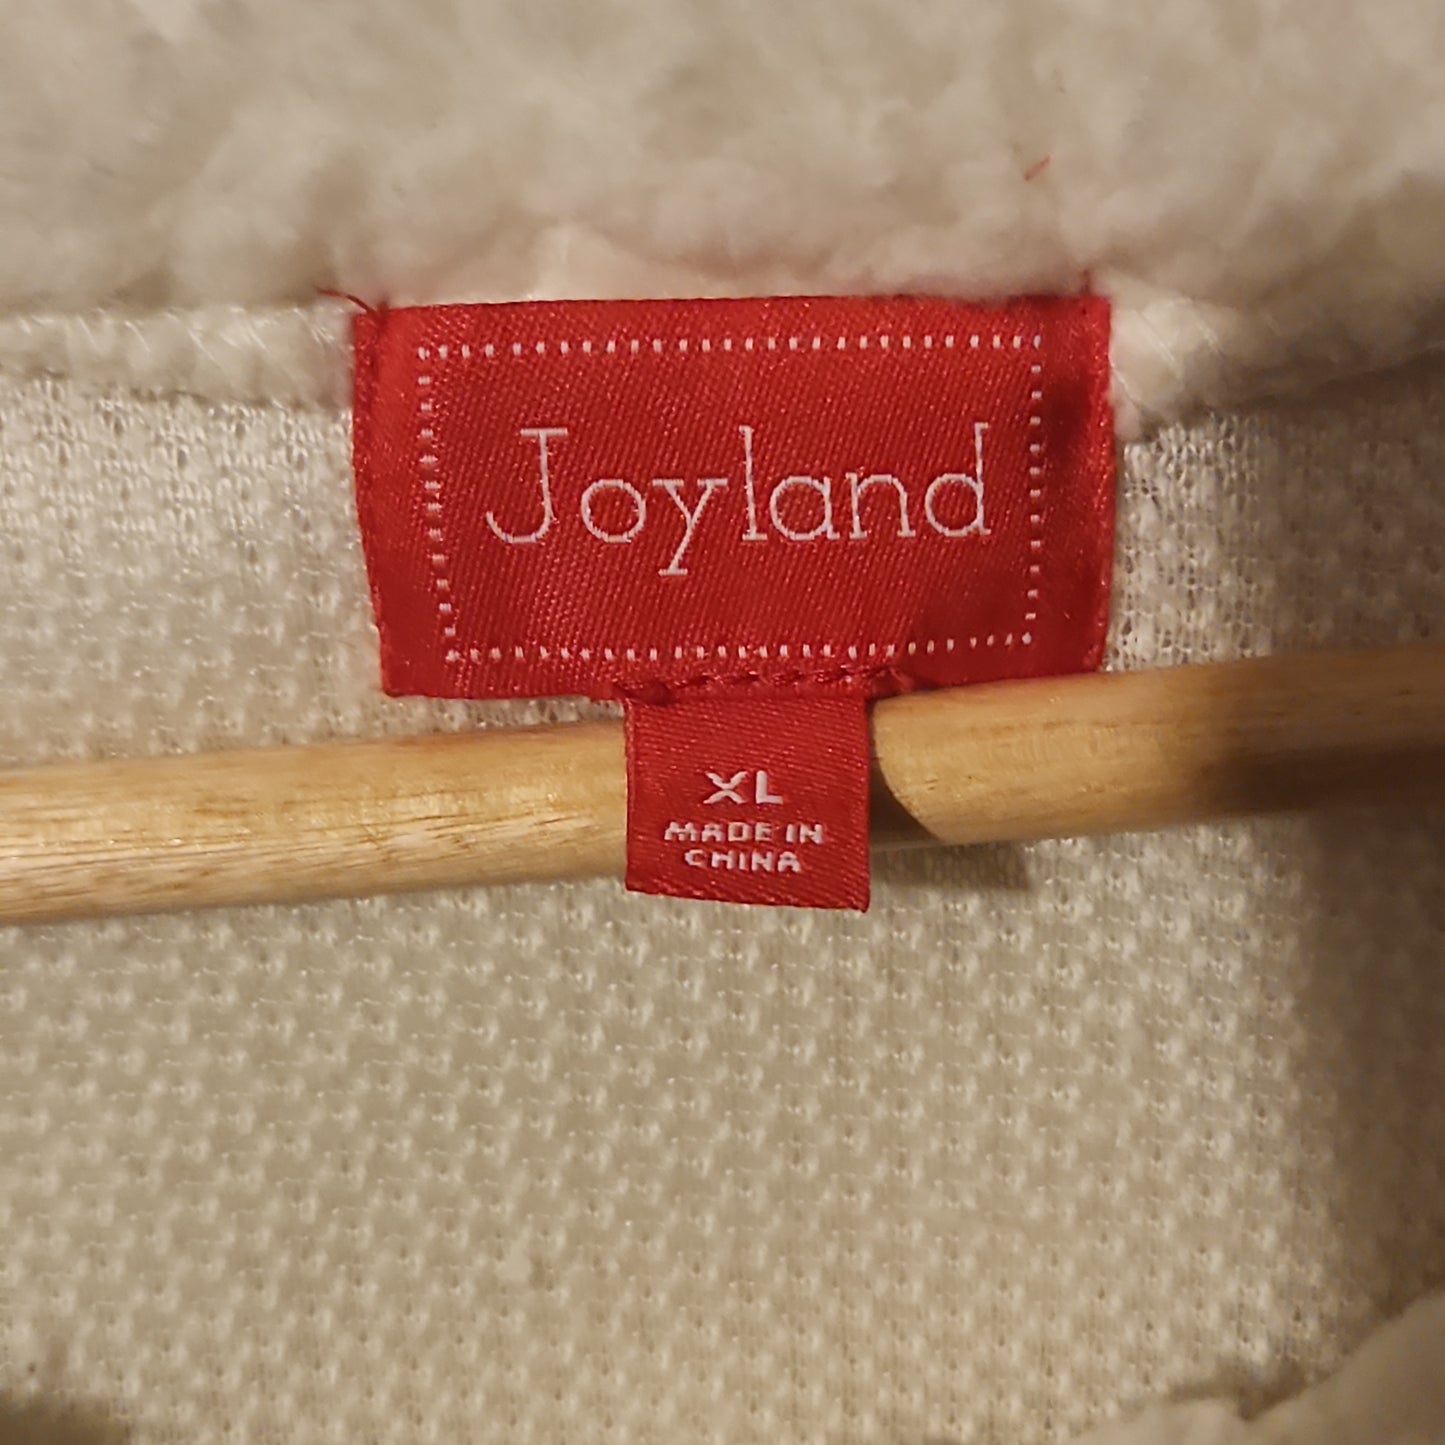 BNWT Joy land Ugly Christmas Sweater